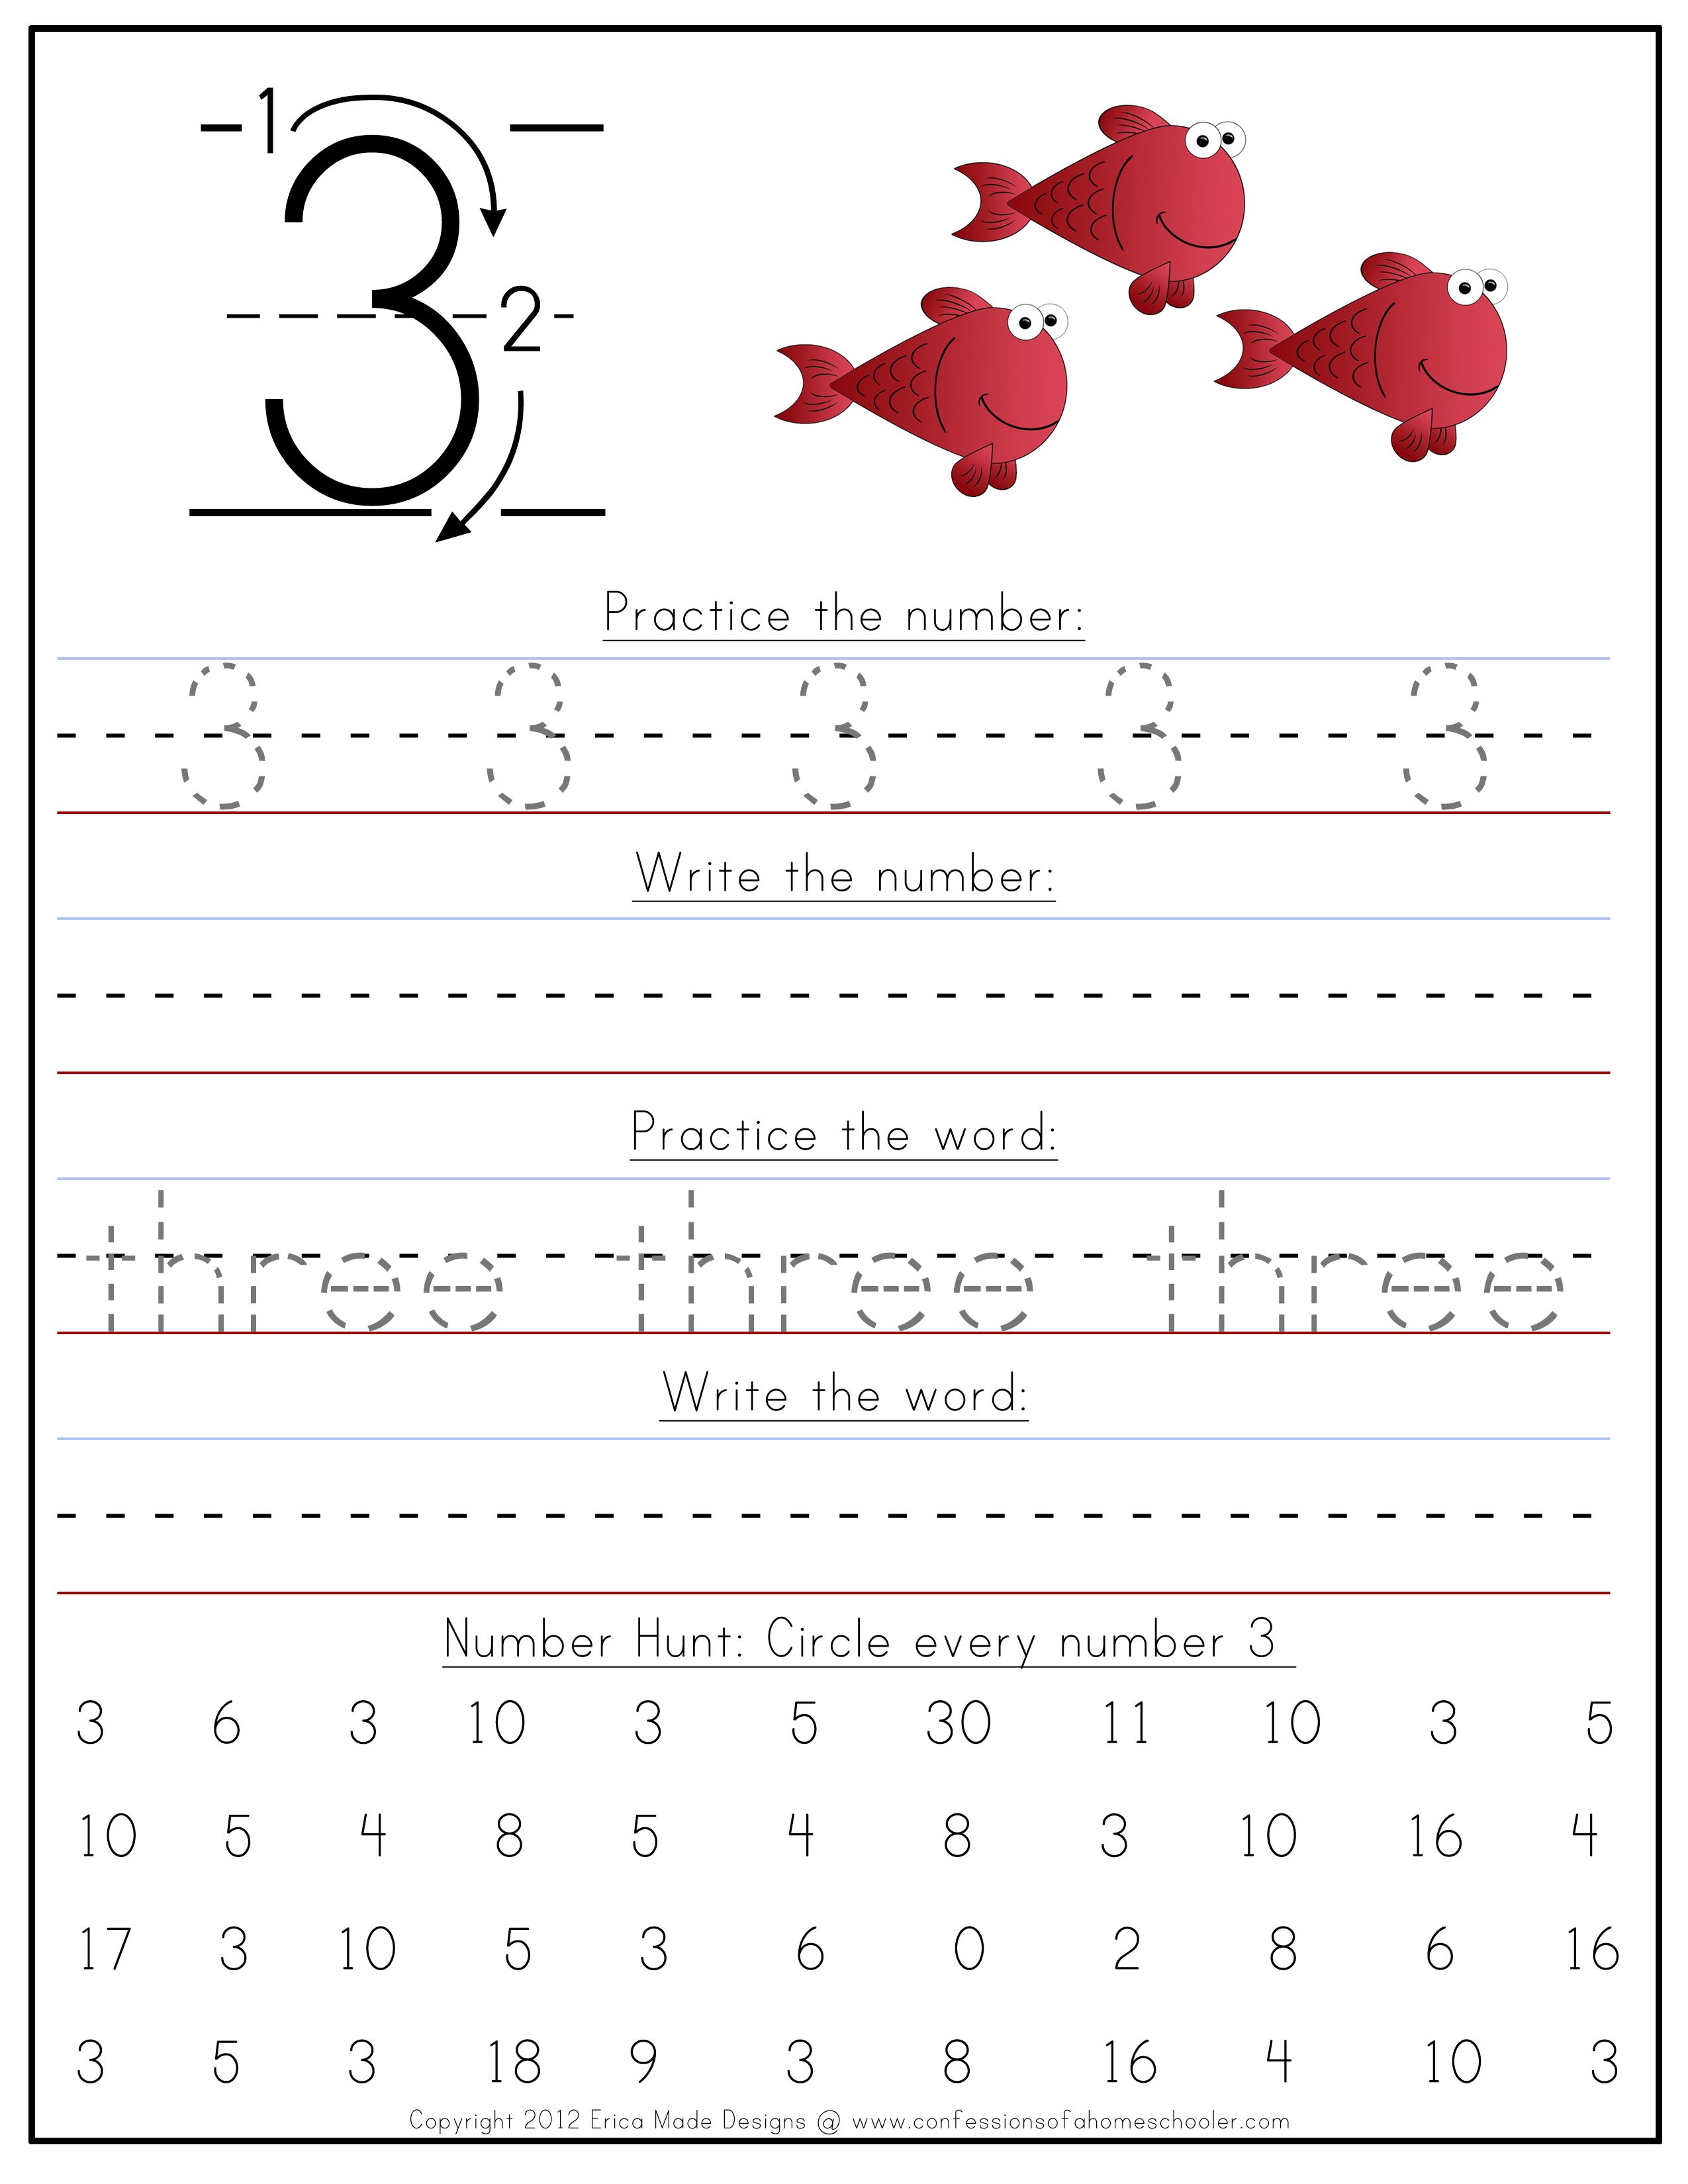  kindergarten worksheets | Preschool worksheets | Printables for kids | #19